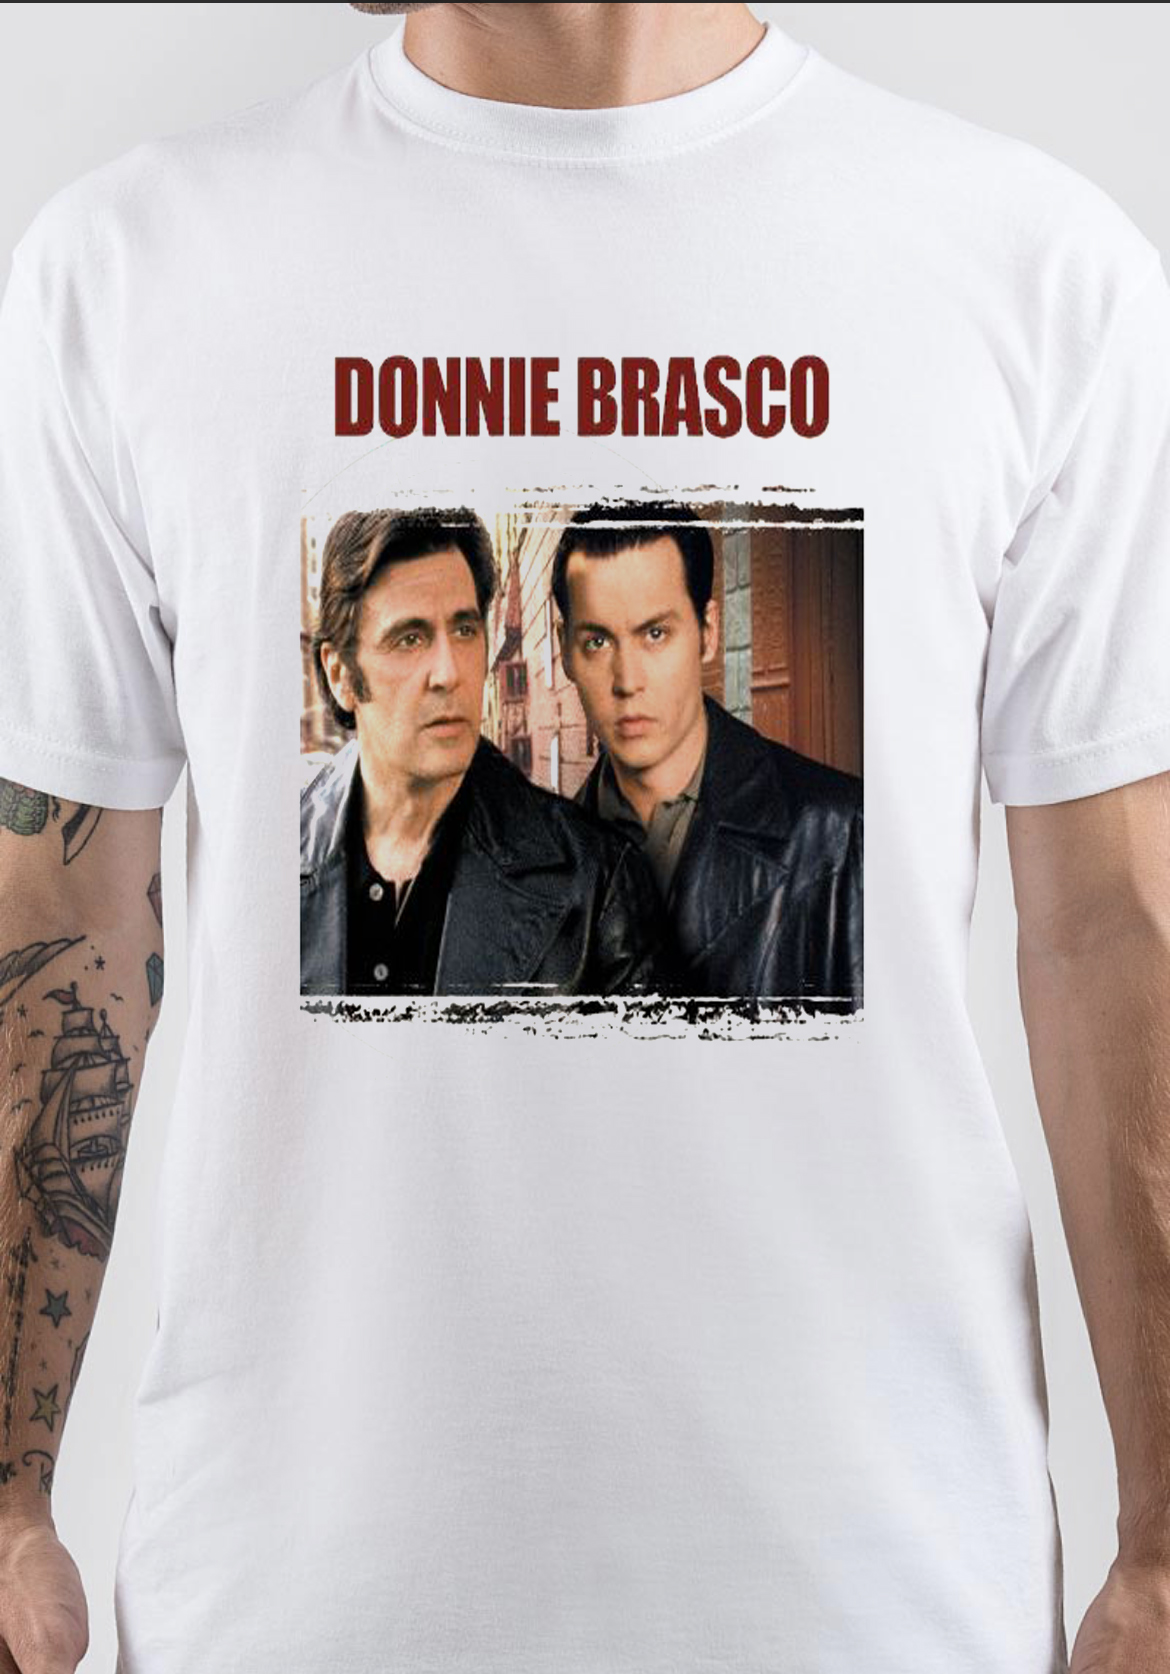 Donnie Brasco T-Shirt And Merchandise